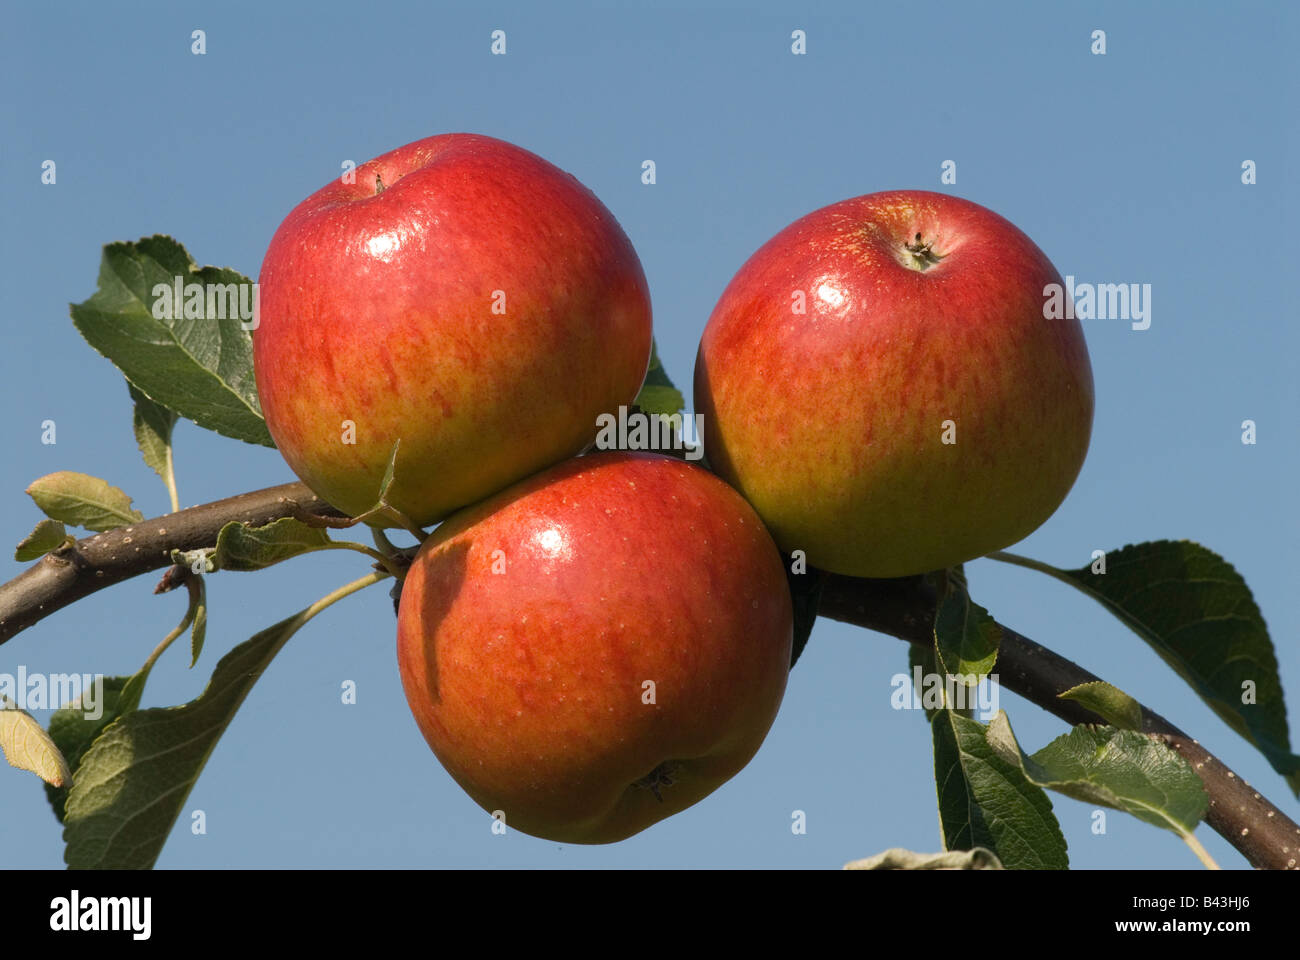 English Apples Meridian apples Lathcoats Apple Farm Galleywood Essex UK Stock Photo